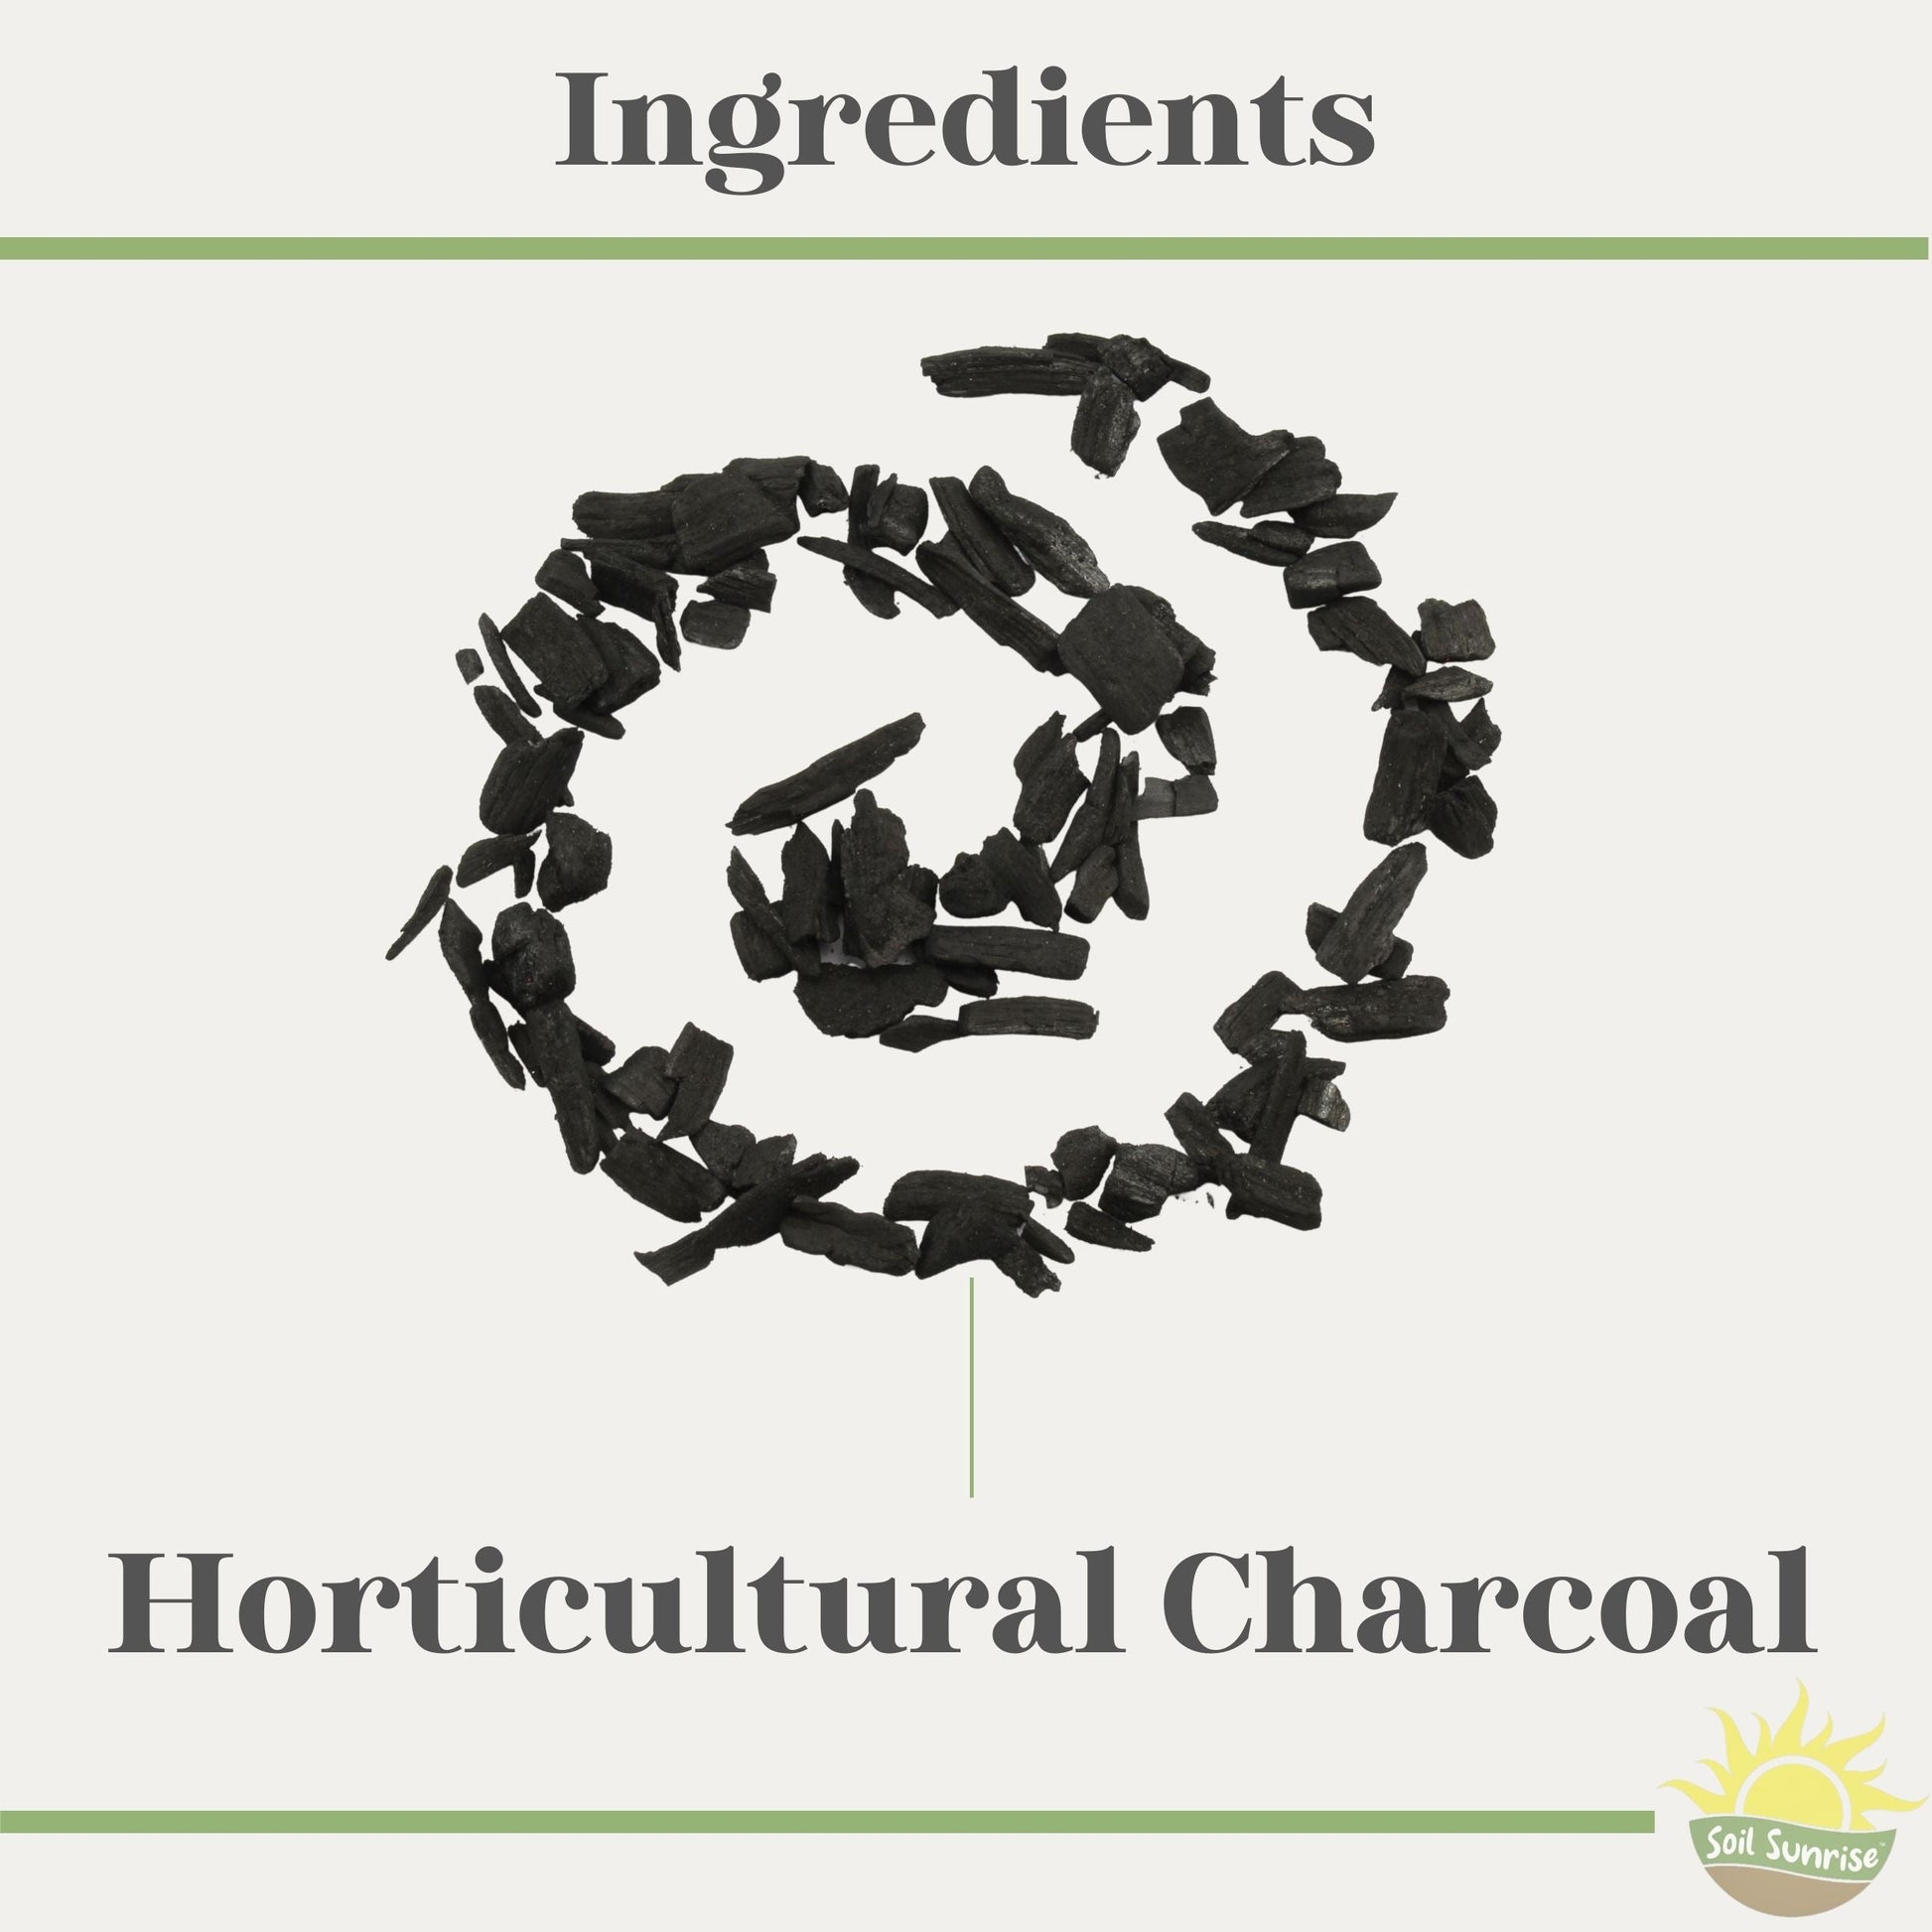 Horticultural Charcoal for Indoor Plants (4 Quarts) - SSKIT136